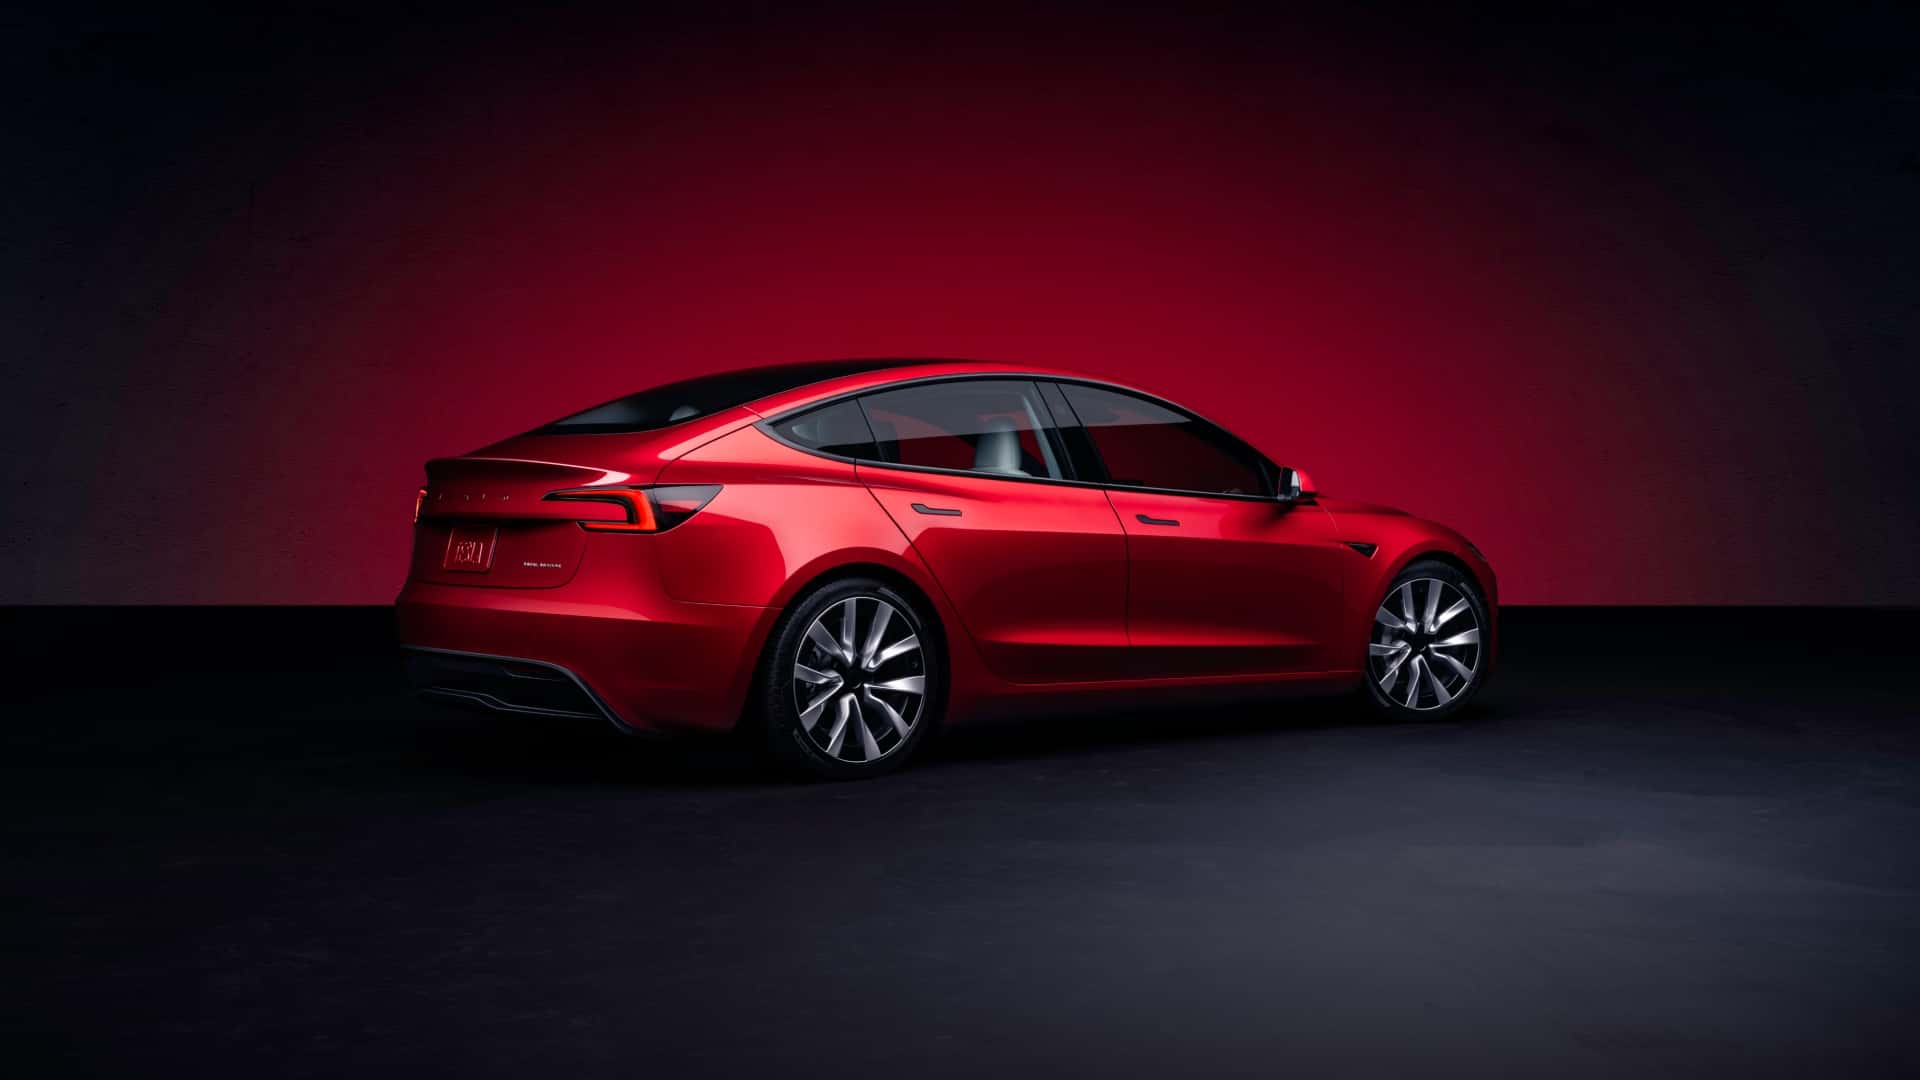 Tesla Sends Massive Shipments of New Model 3 Highland to Europe